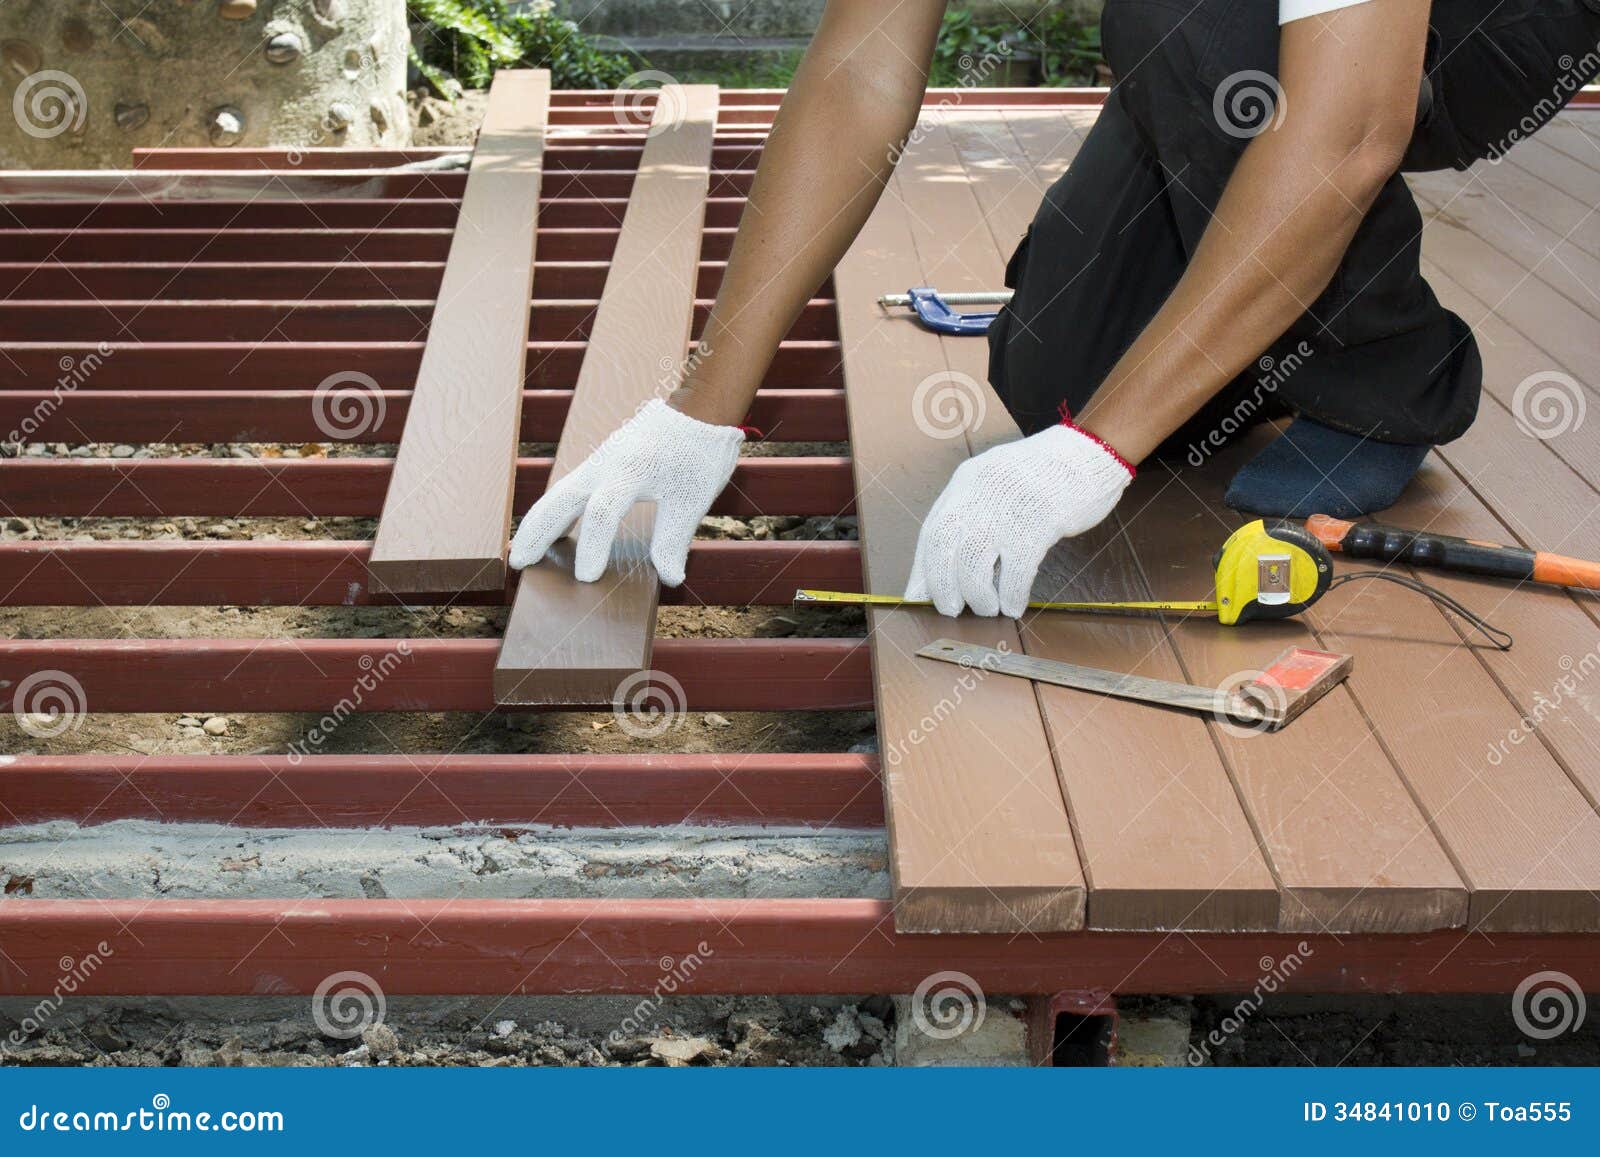 Worker Installing Wood Floor For Patio Stock Photo - Image: 34841010